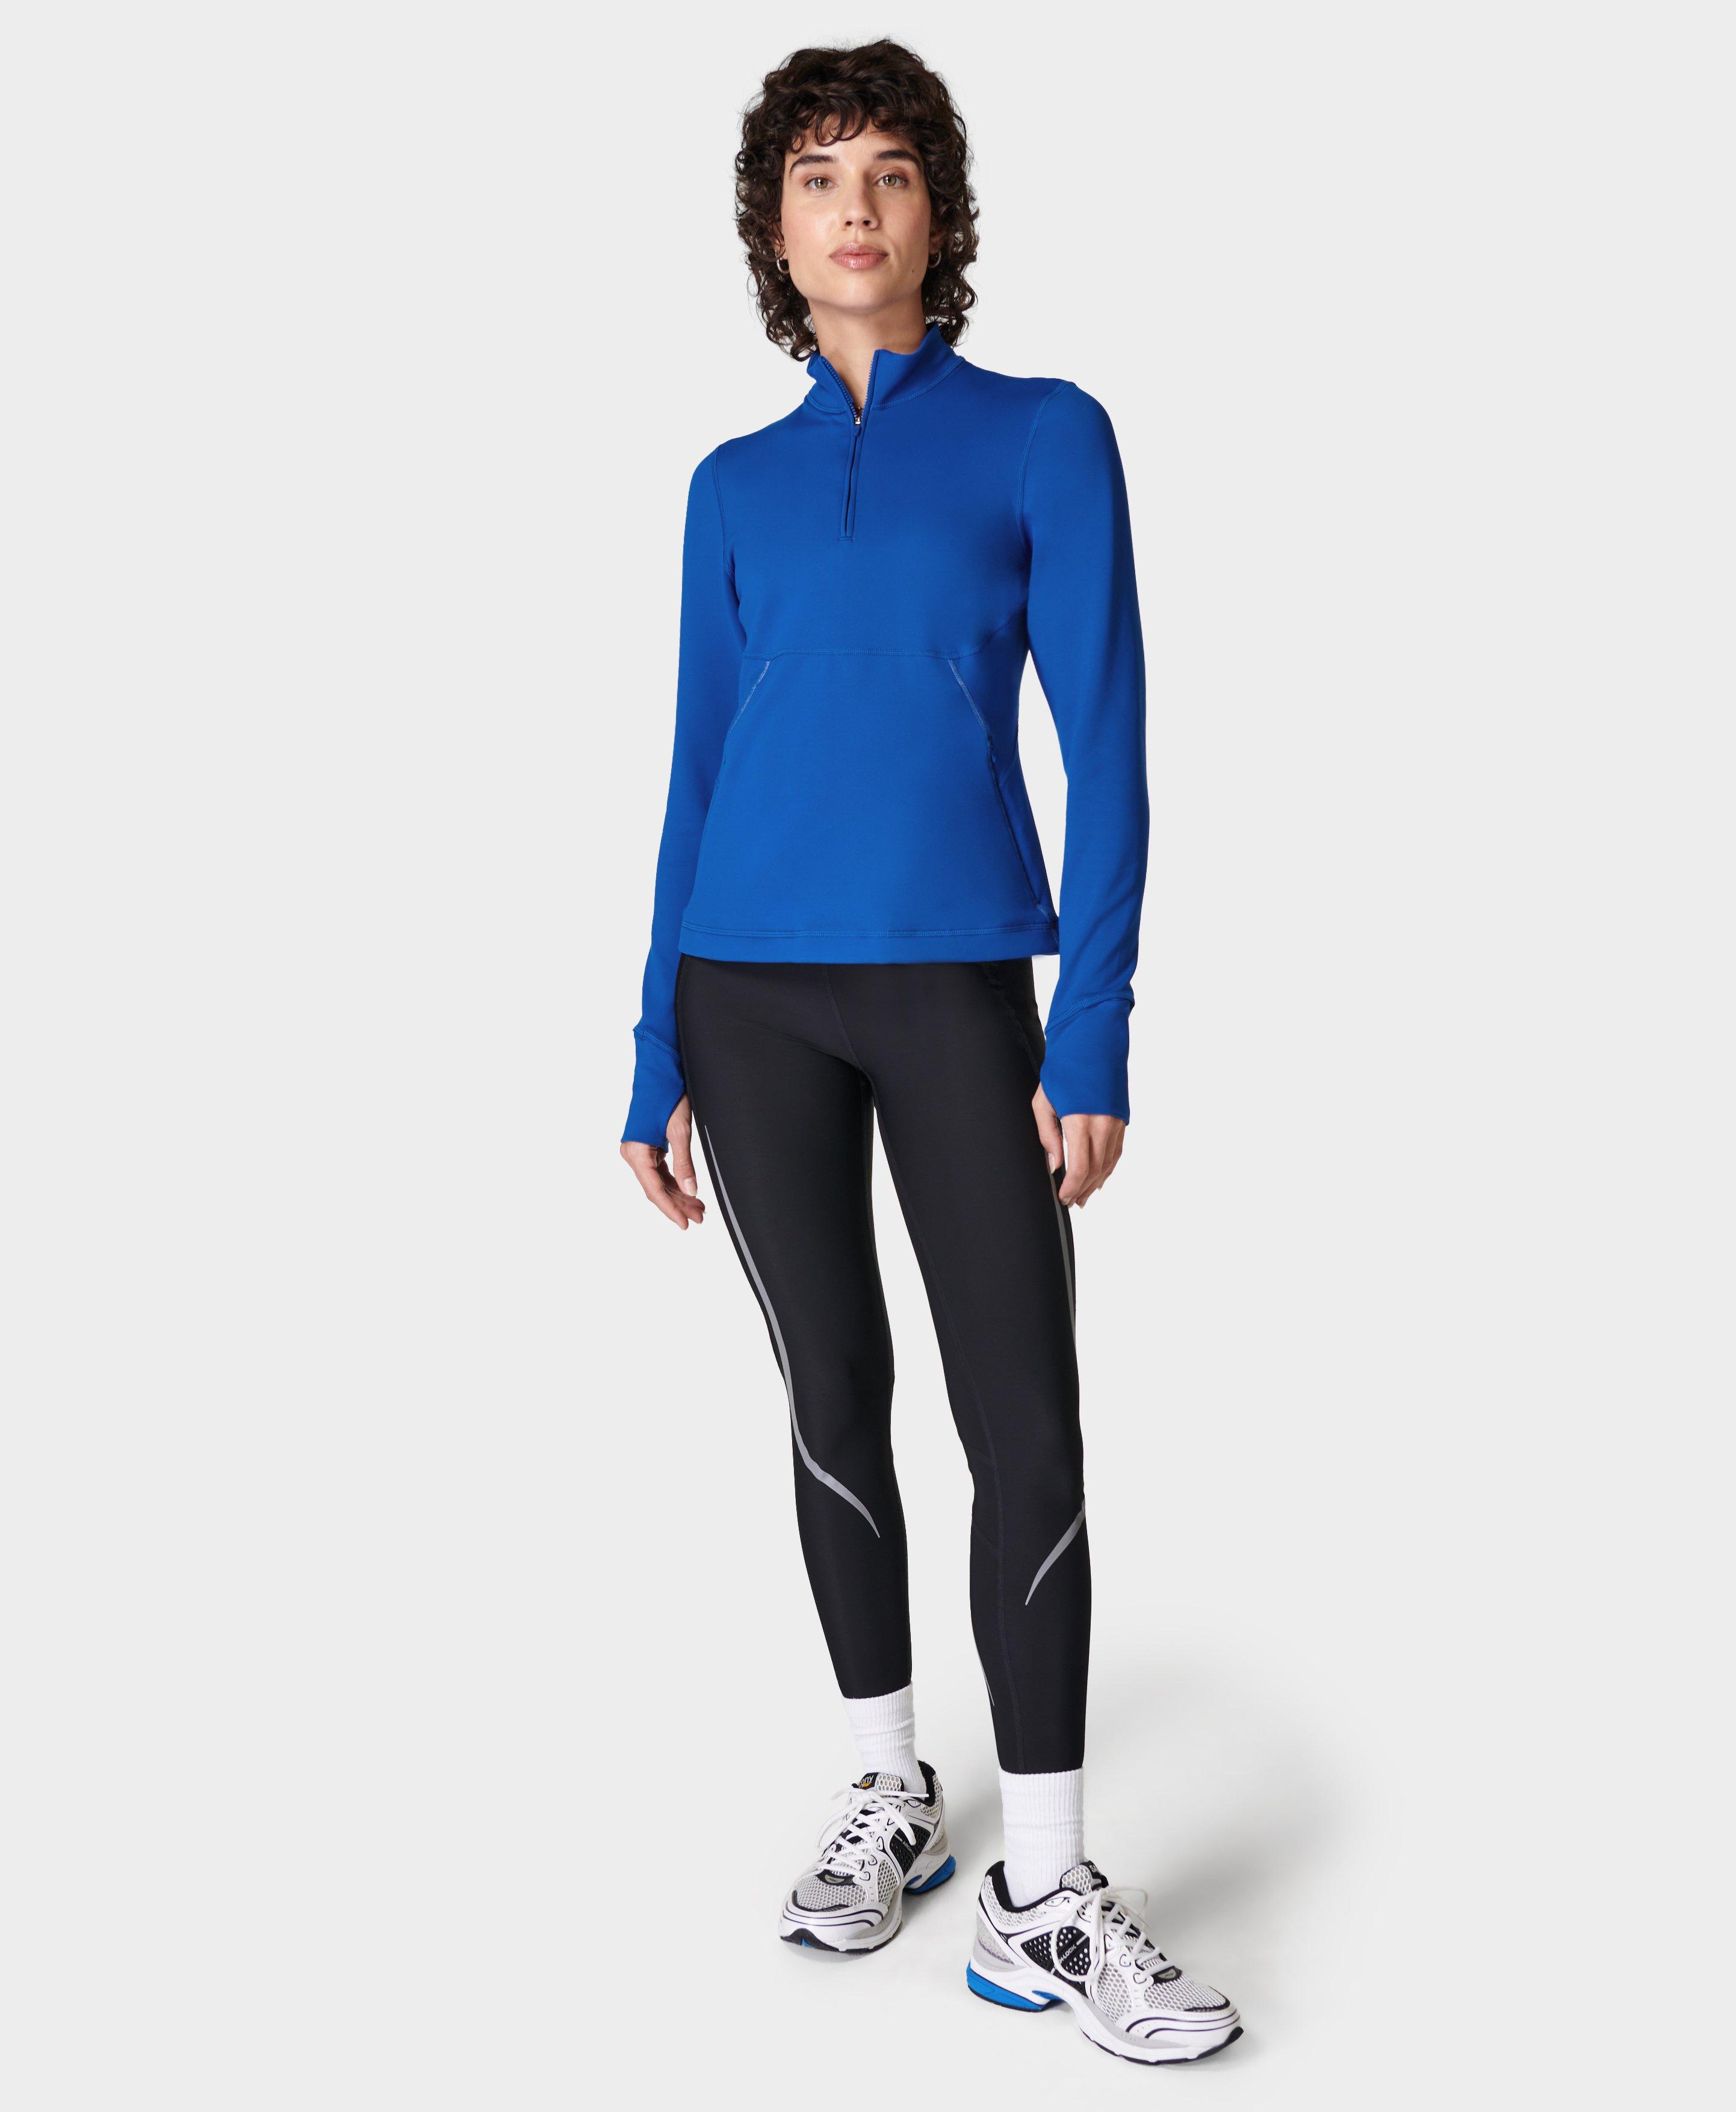 Therma Boost Running Half Zip - Black, Women's Sweaters + Hoodies